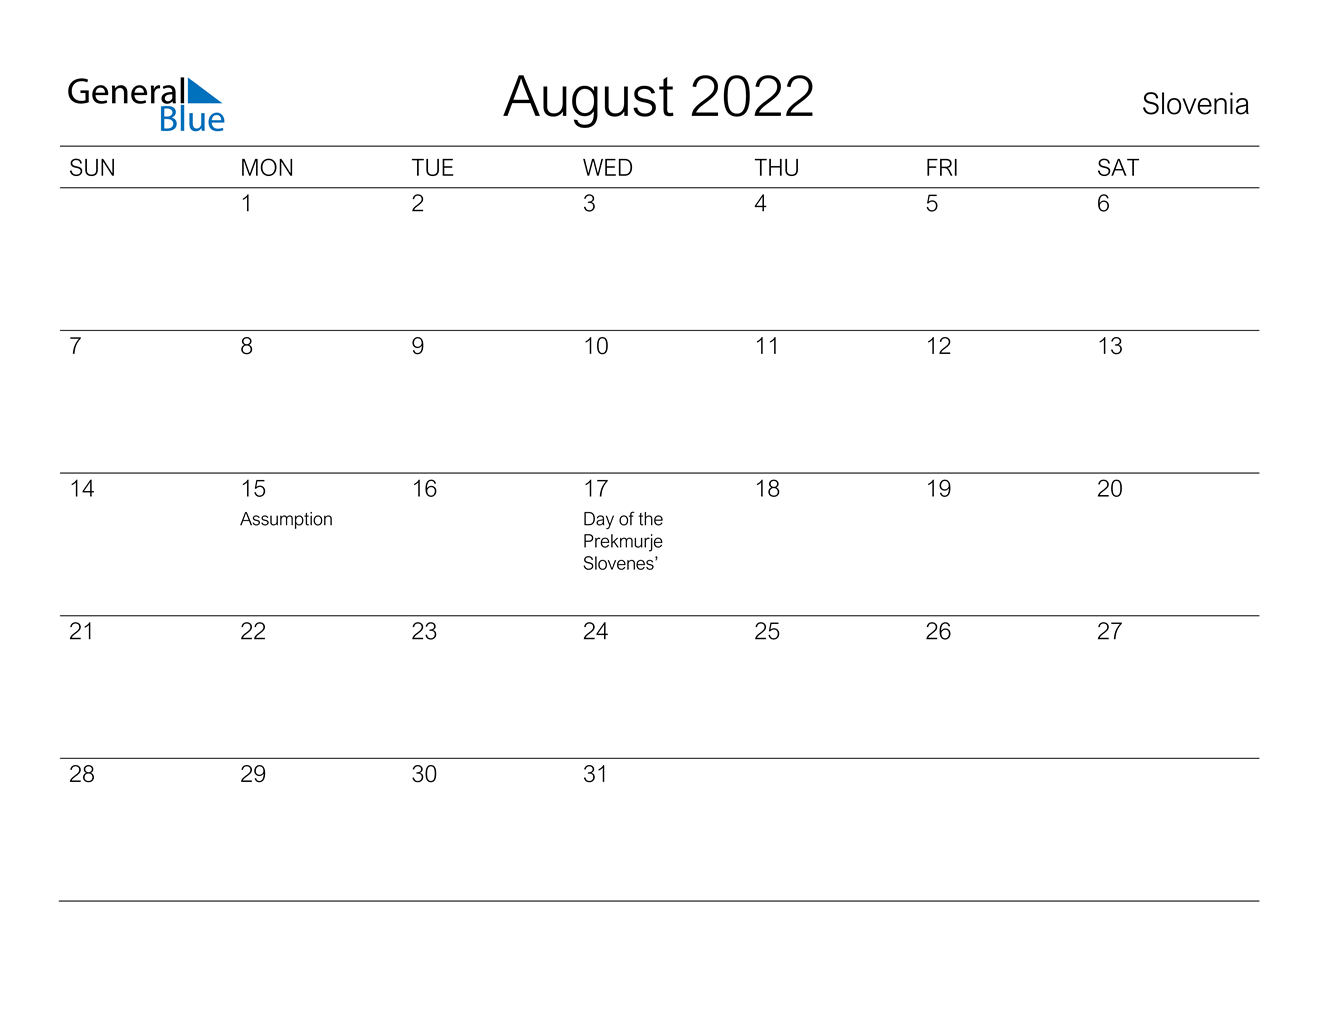 August 2022 Calendar - Slovenia